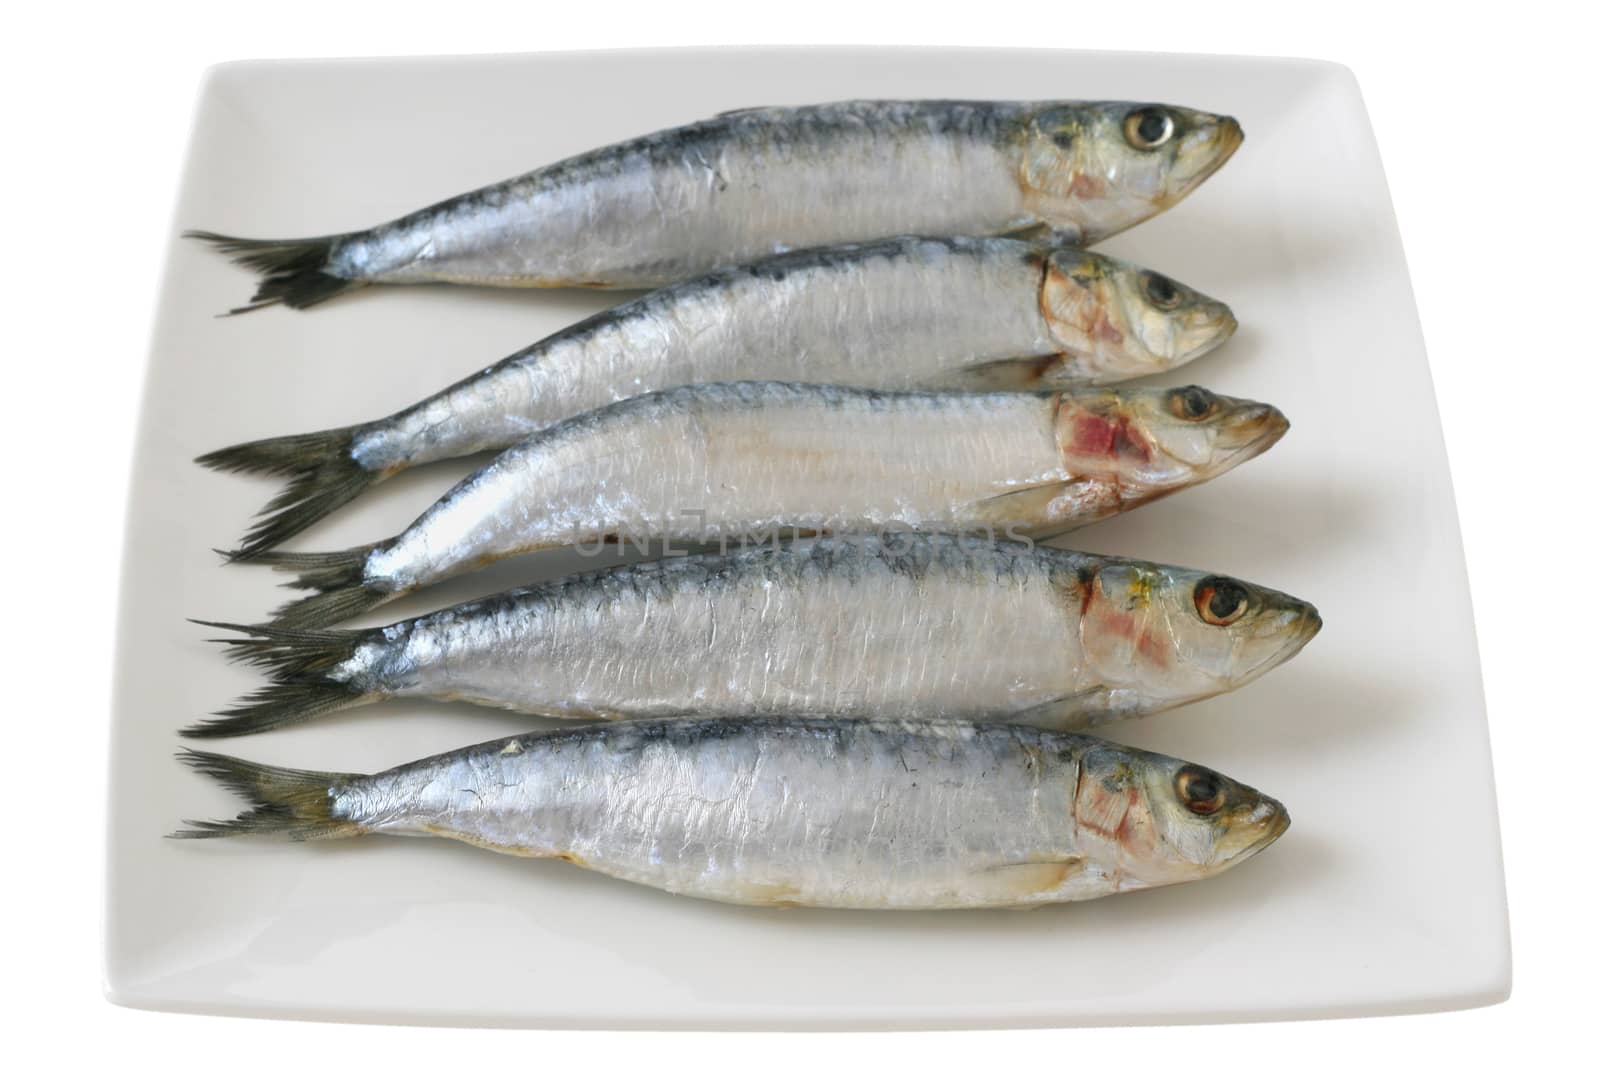 sardines on dish by nataliamylova